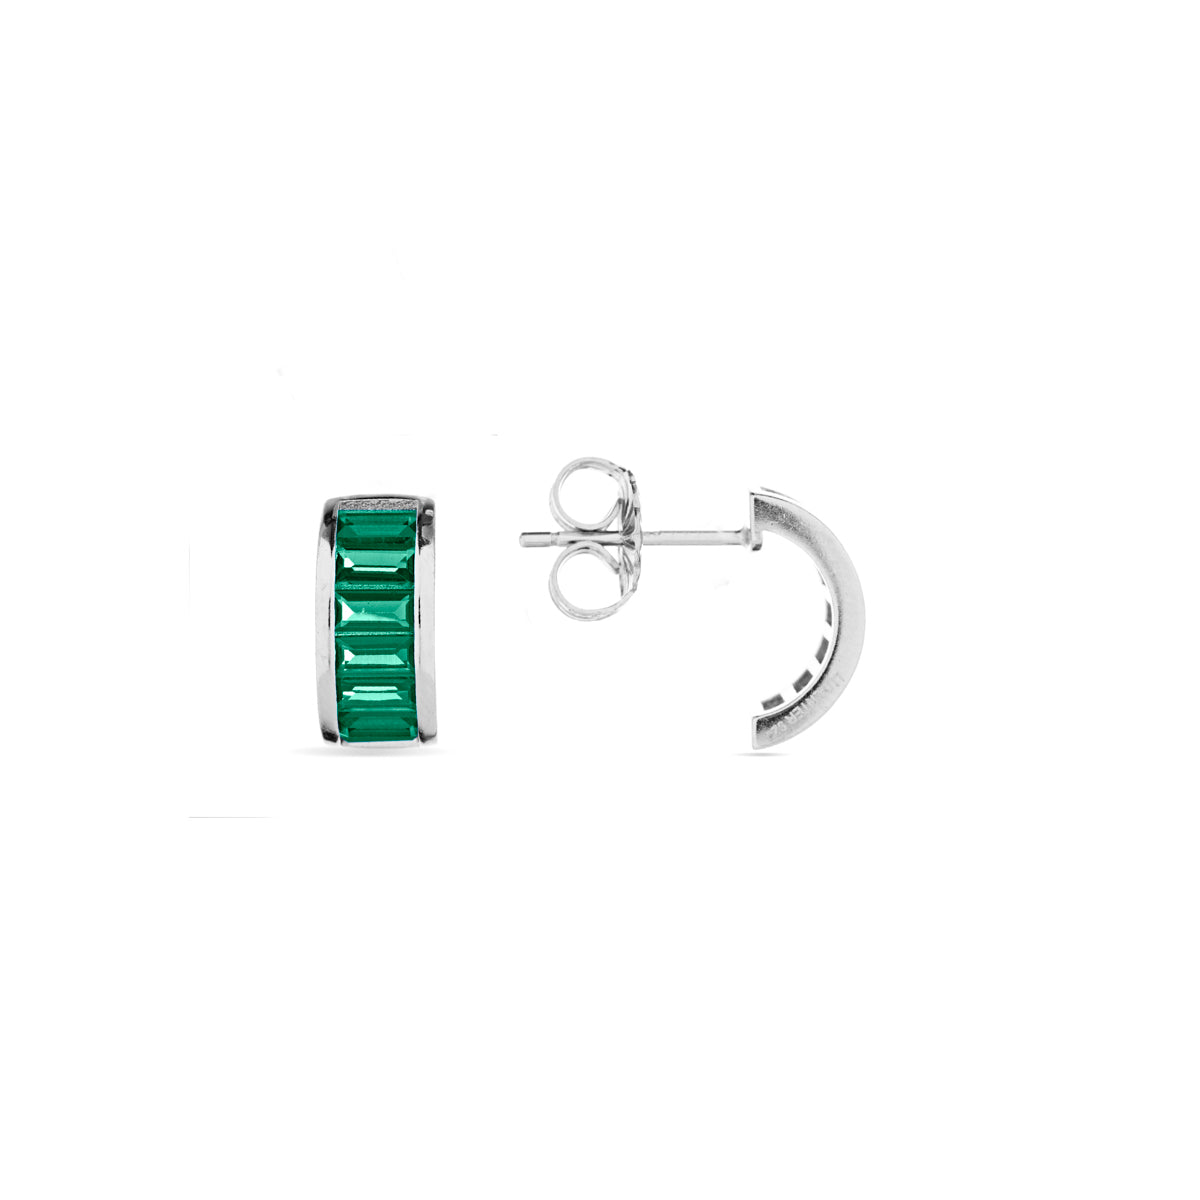 Ardren silver and Emerald Cz earrings